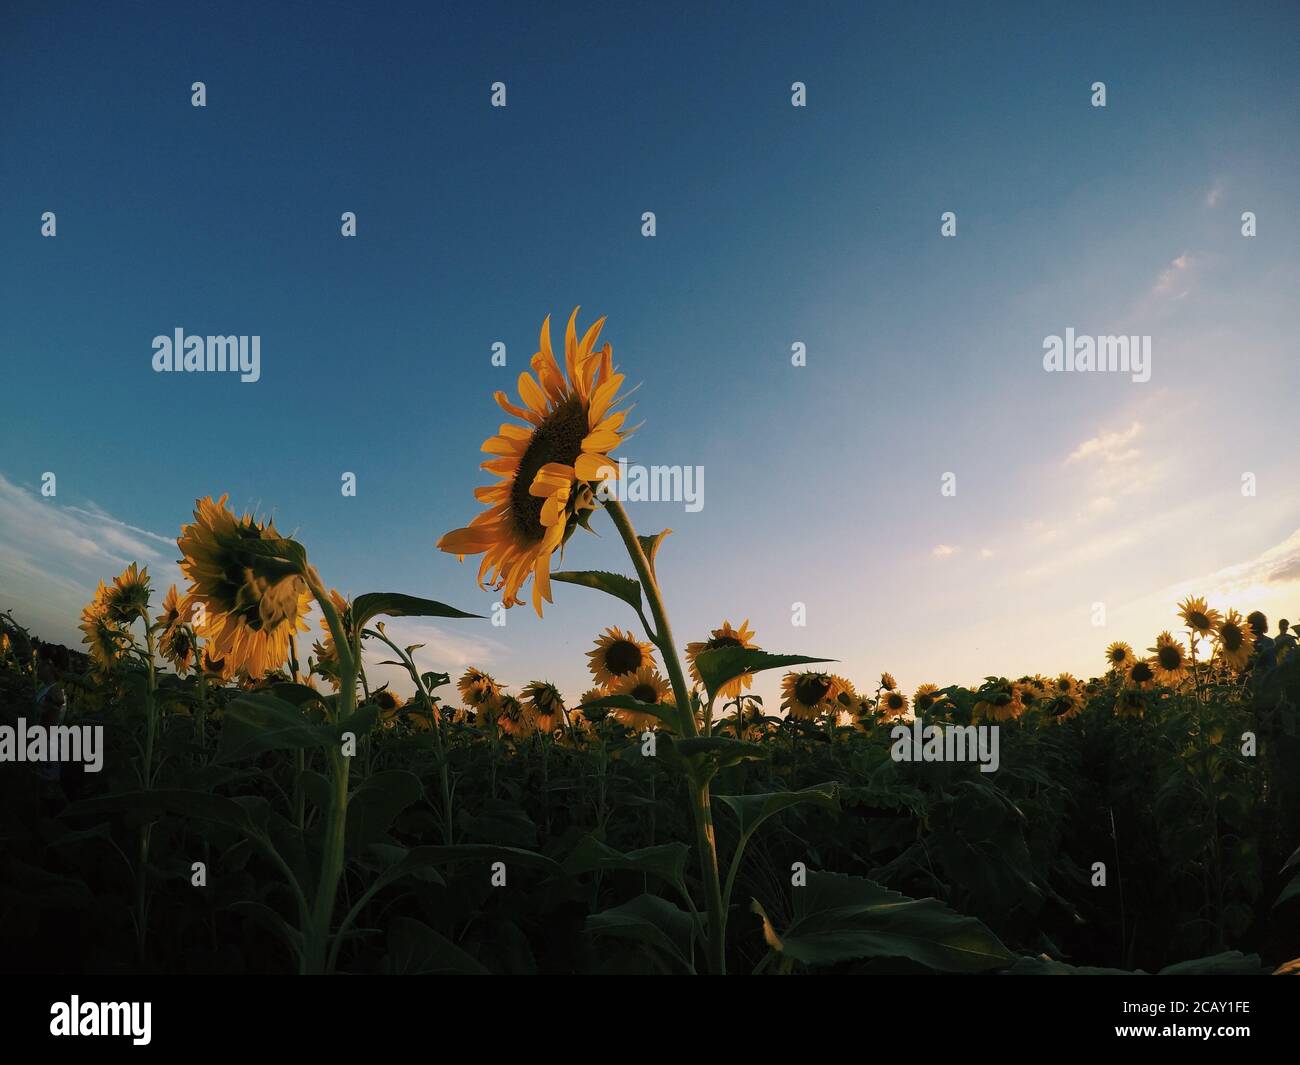 Blooming Sunflower -Kiva Hirsch Photos Stock Photo